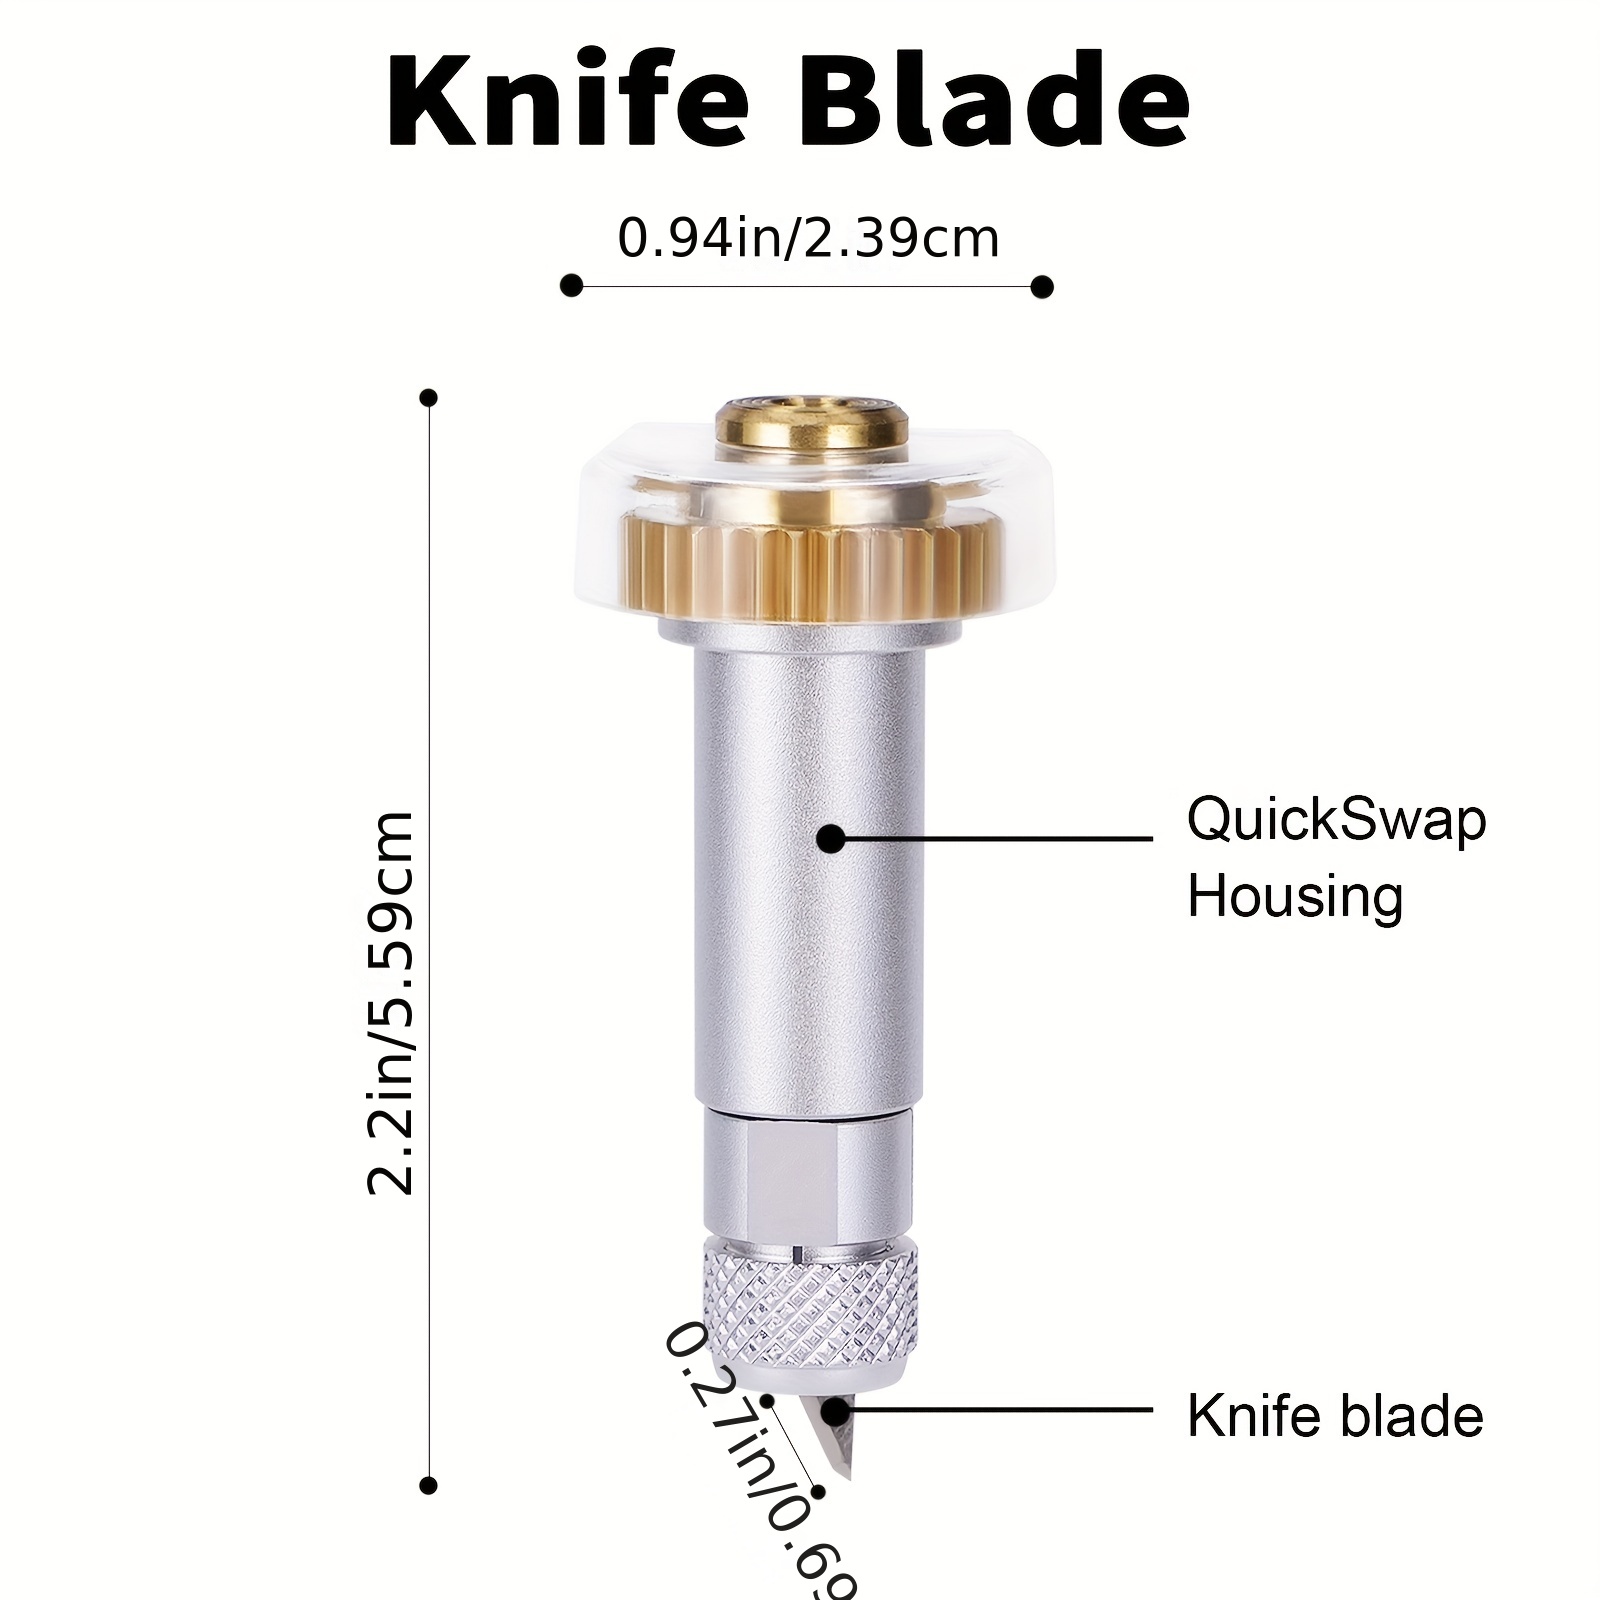 How to use the Cricut Knife Blade